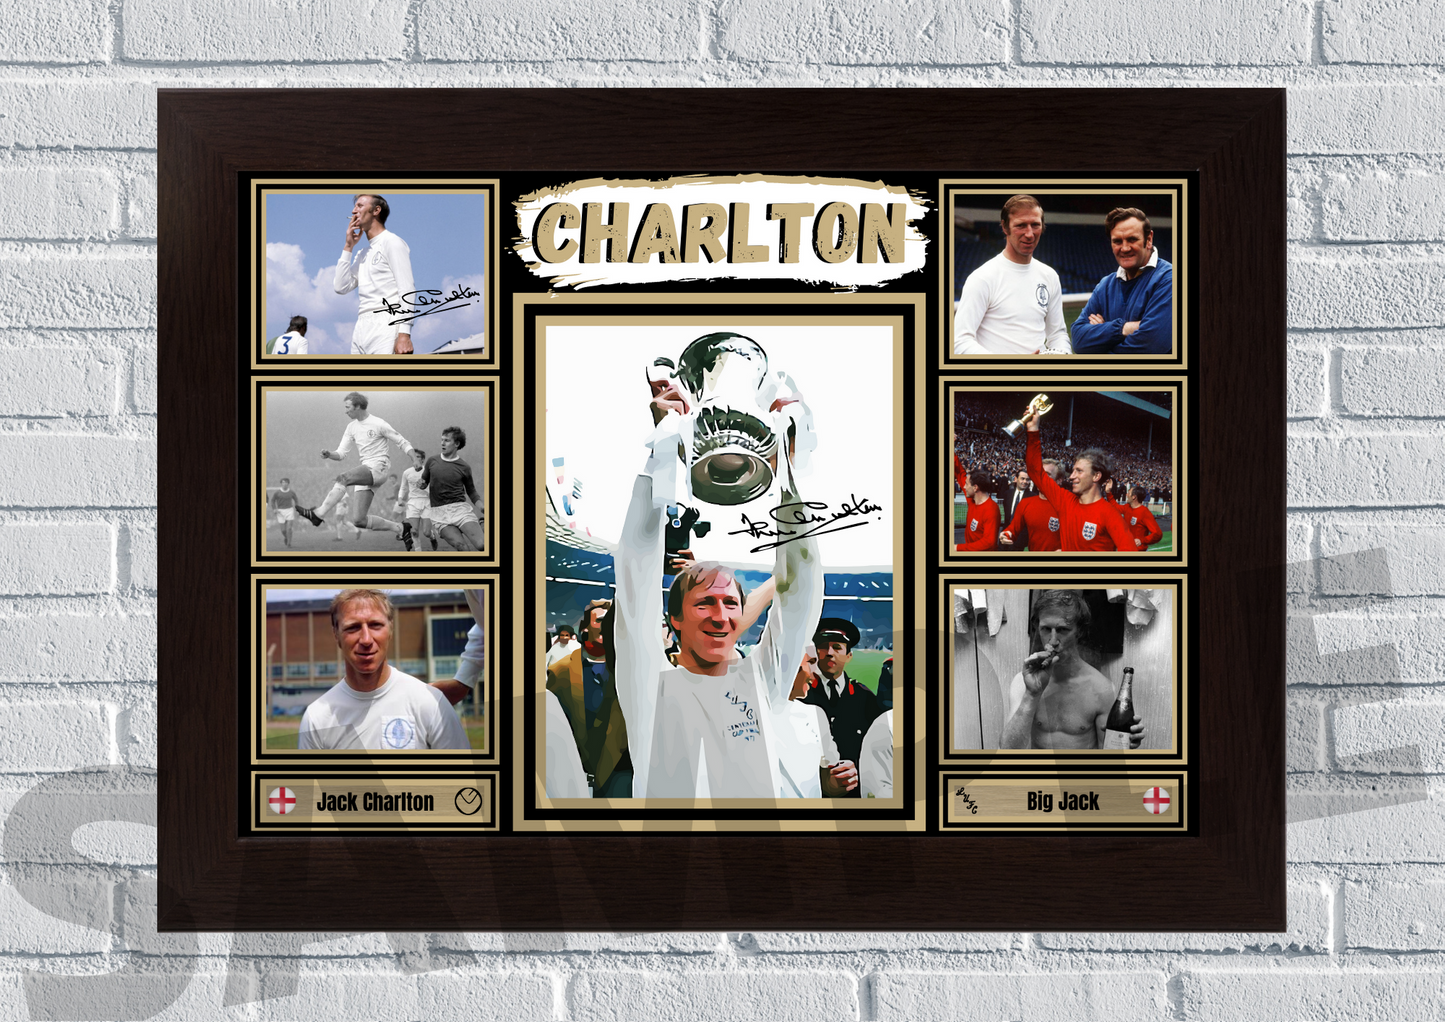 Jack Charlton - Leeds United legend Football memorabilia/collectable signed print #101